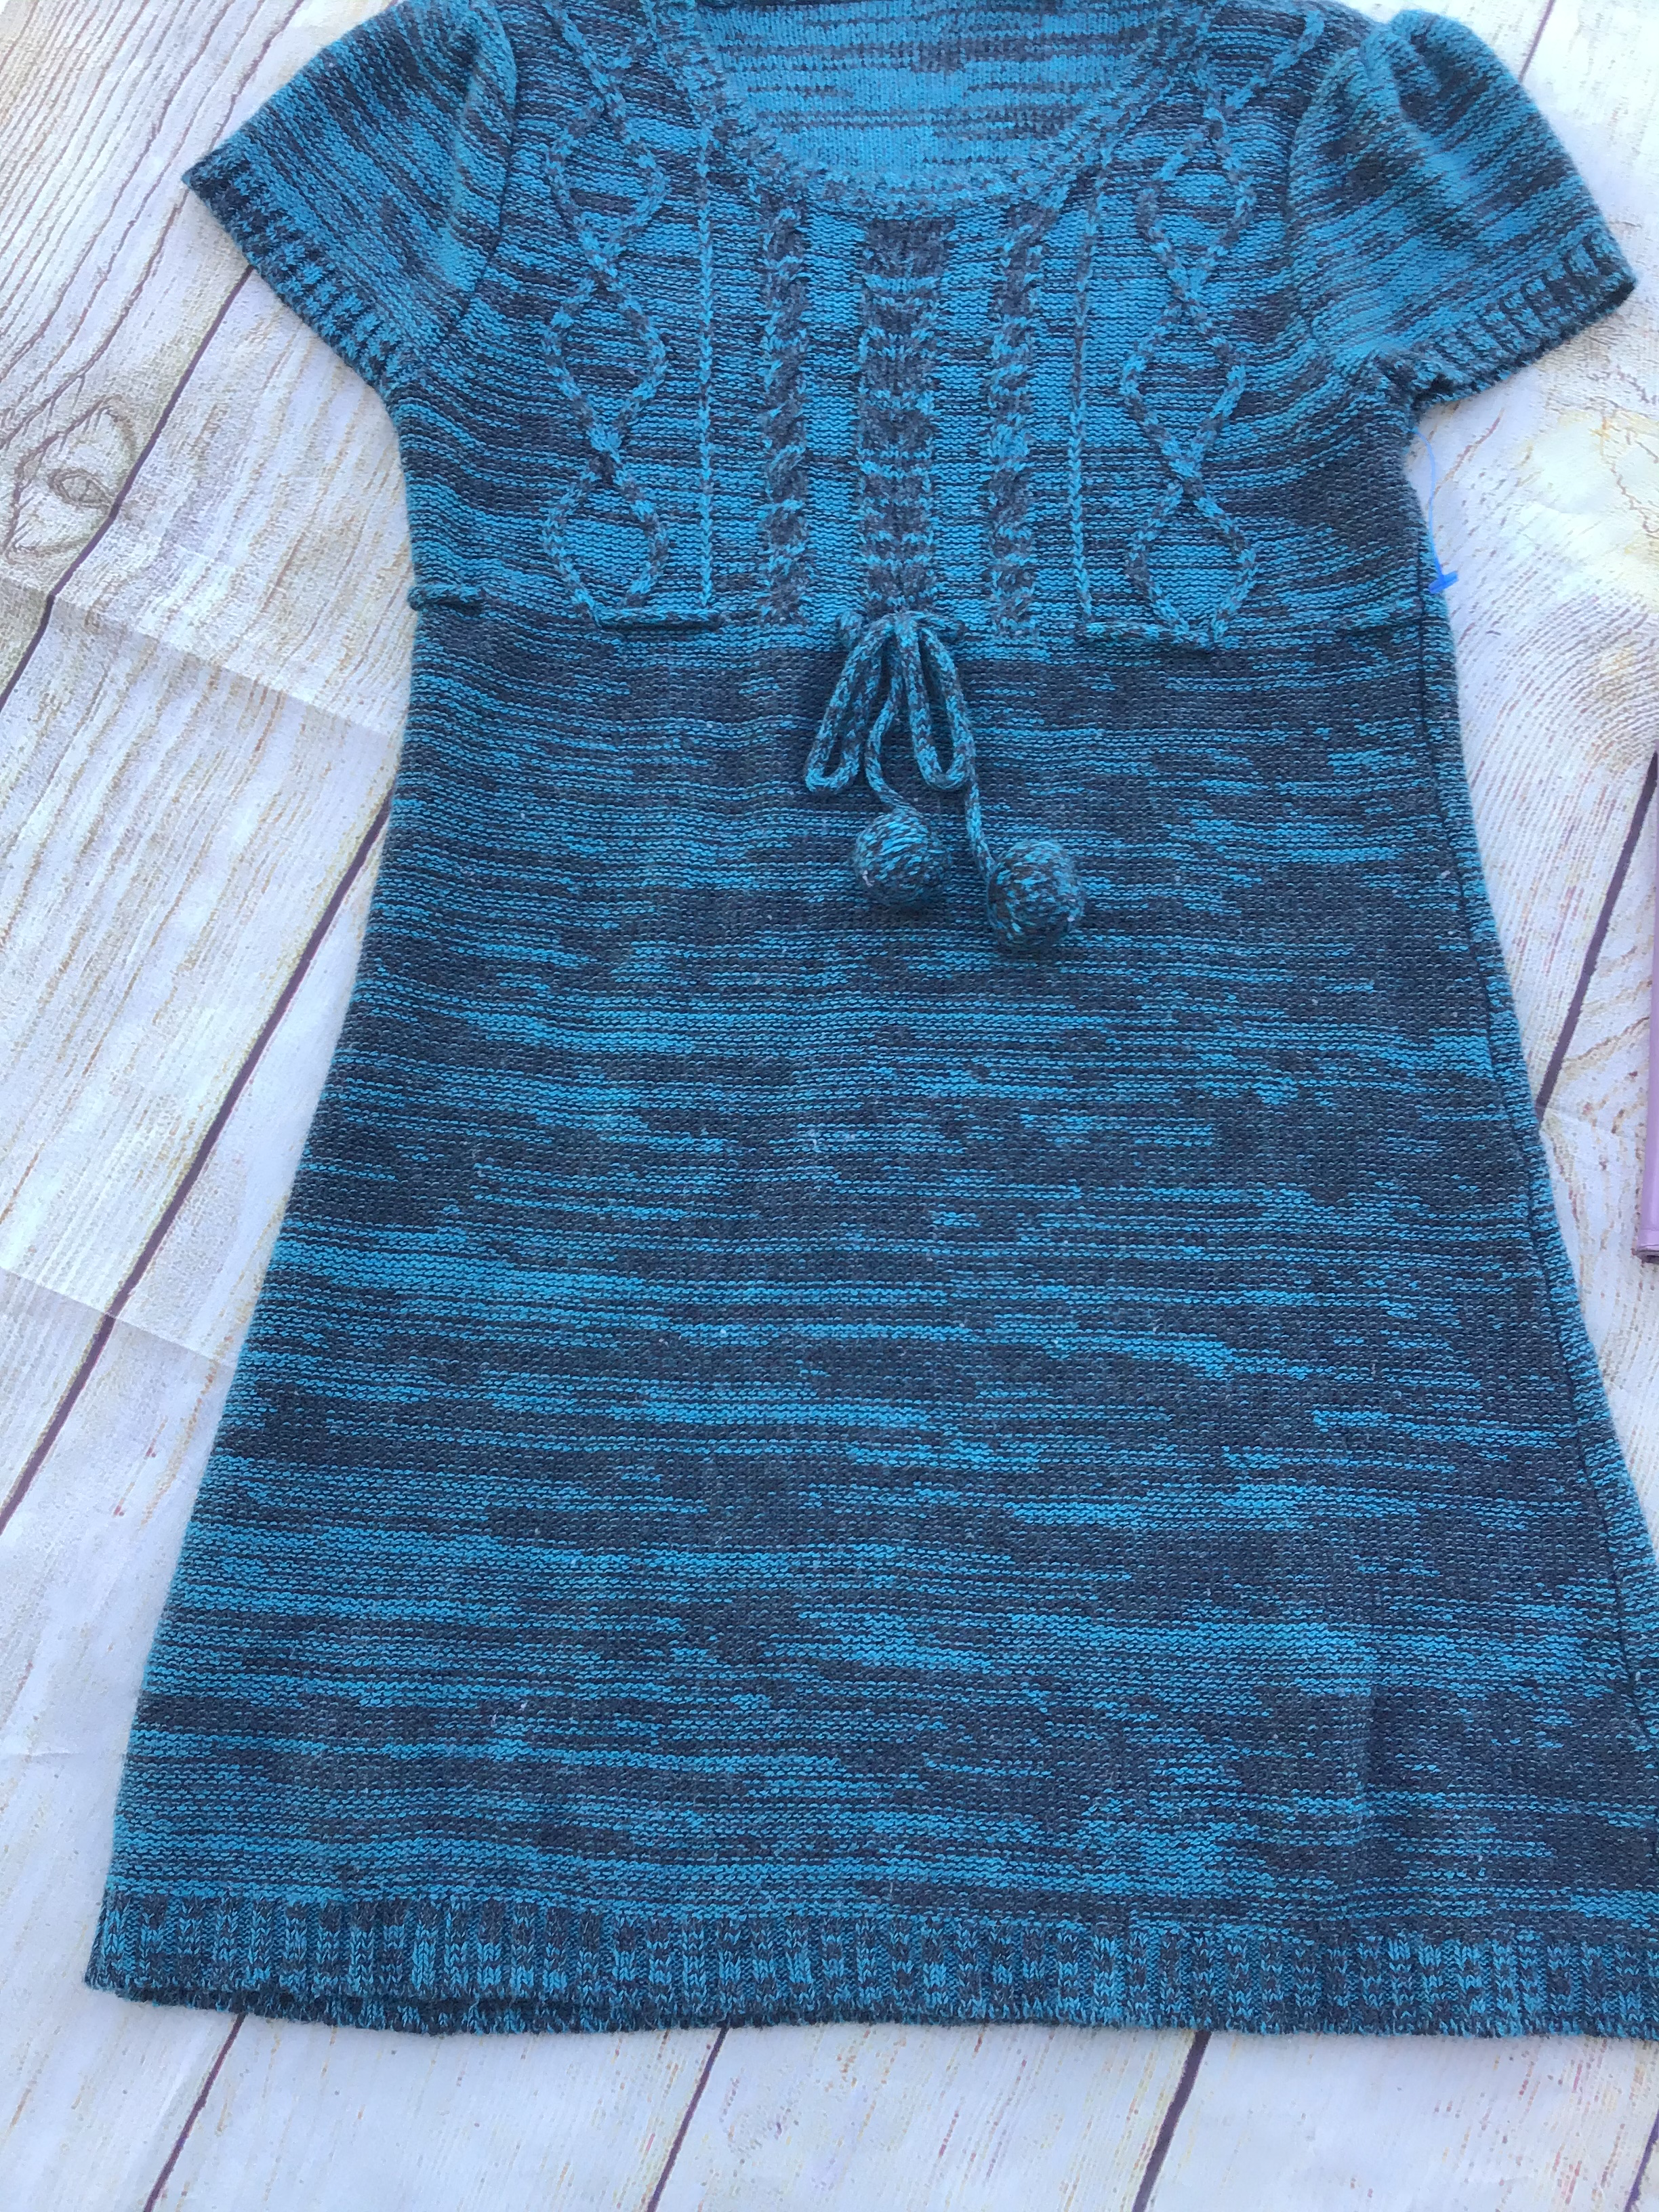 Heart n Crush Girls Knit Blue Gray Sweater Dress sz 10-12